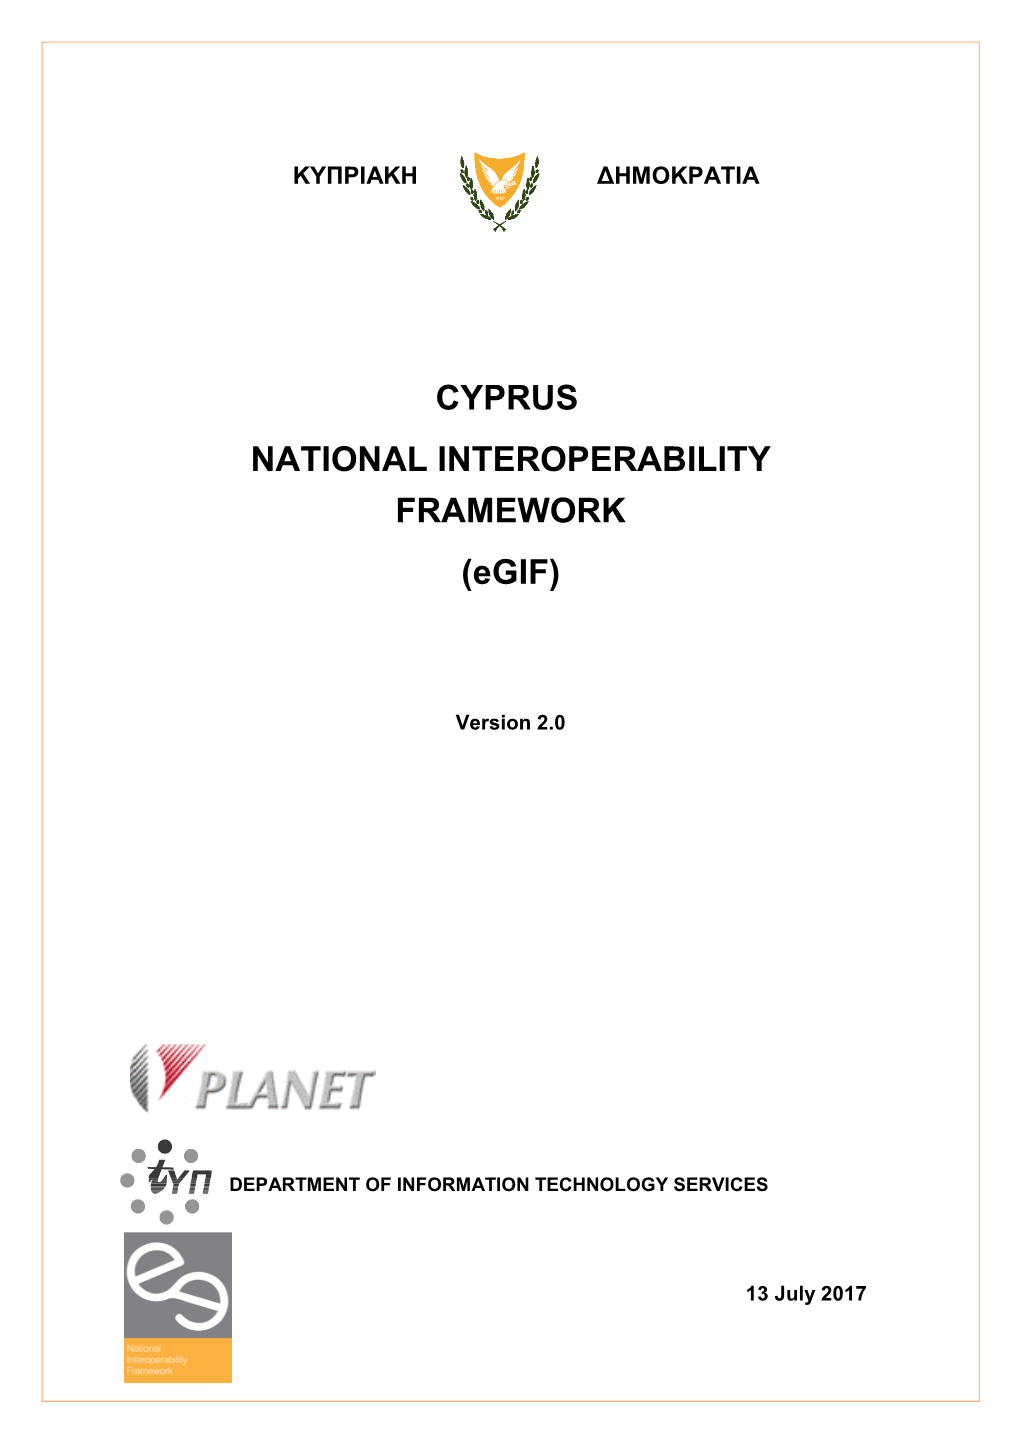 CYPRUS NATIONAL INTEROPERABILITY FRAMEWORK (Egif)